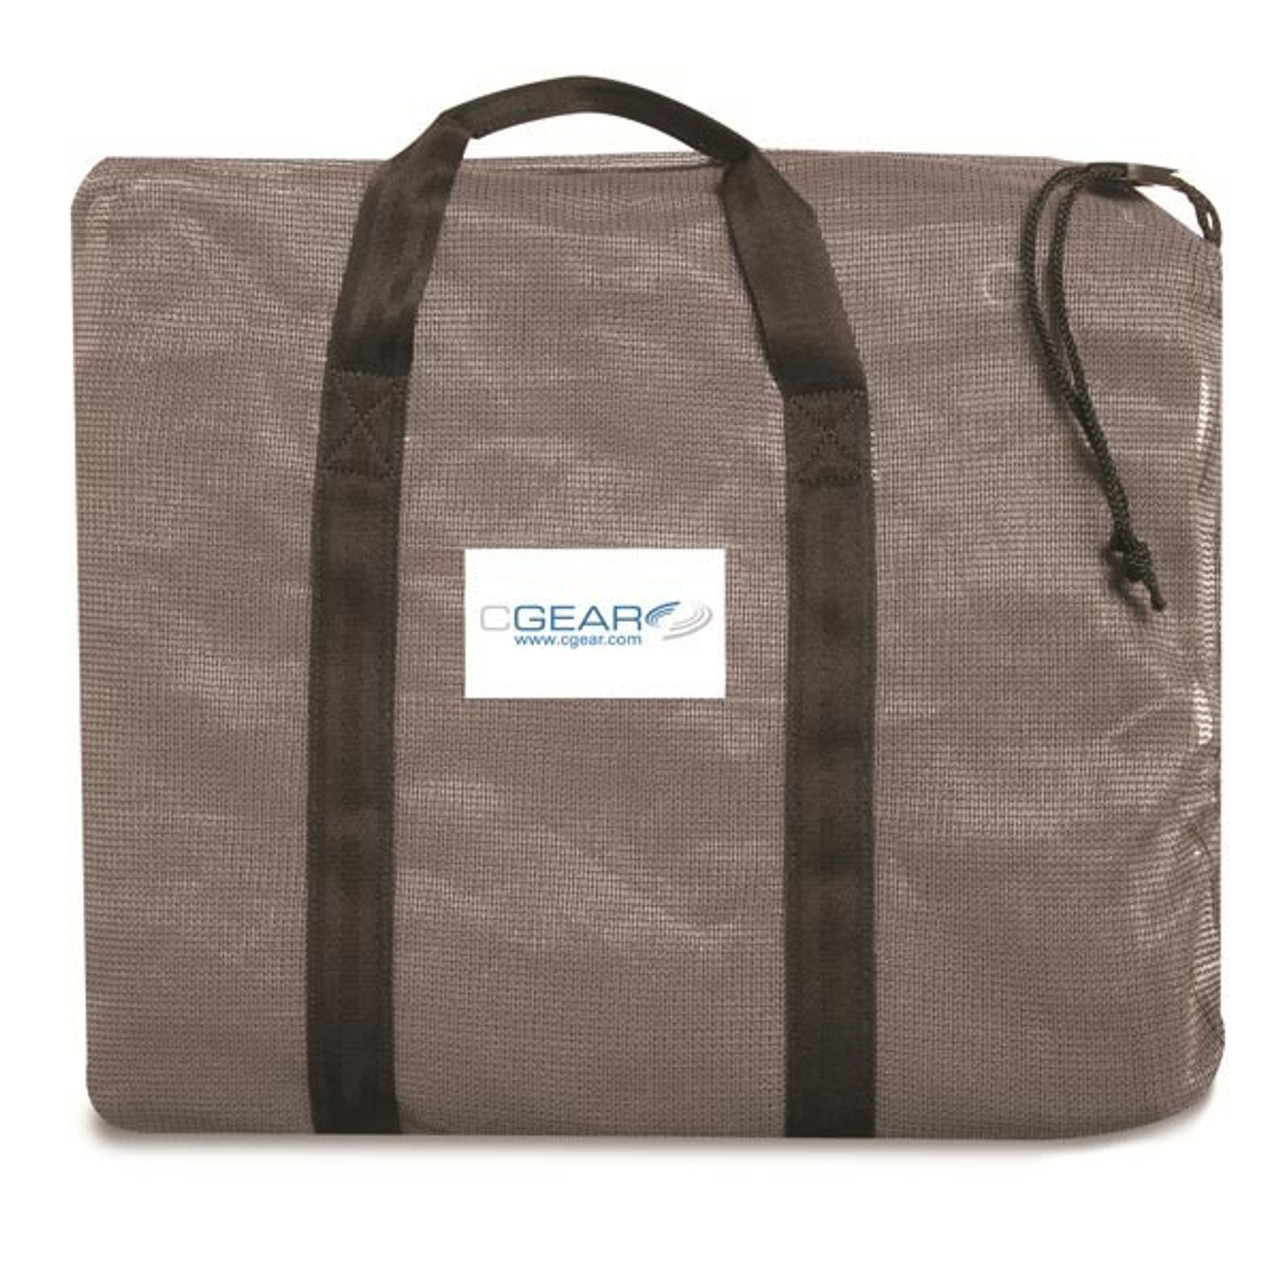 CGear Multimat Flooring - Carry Bag